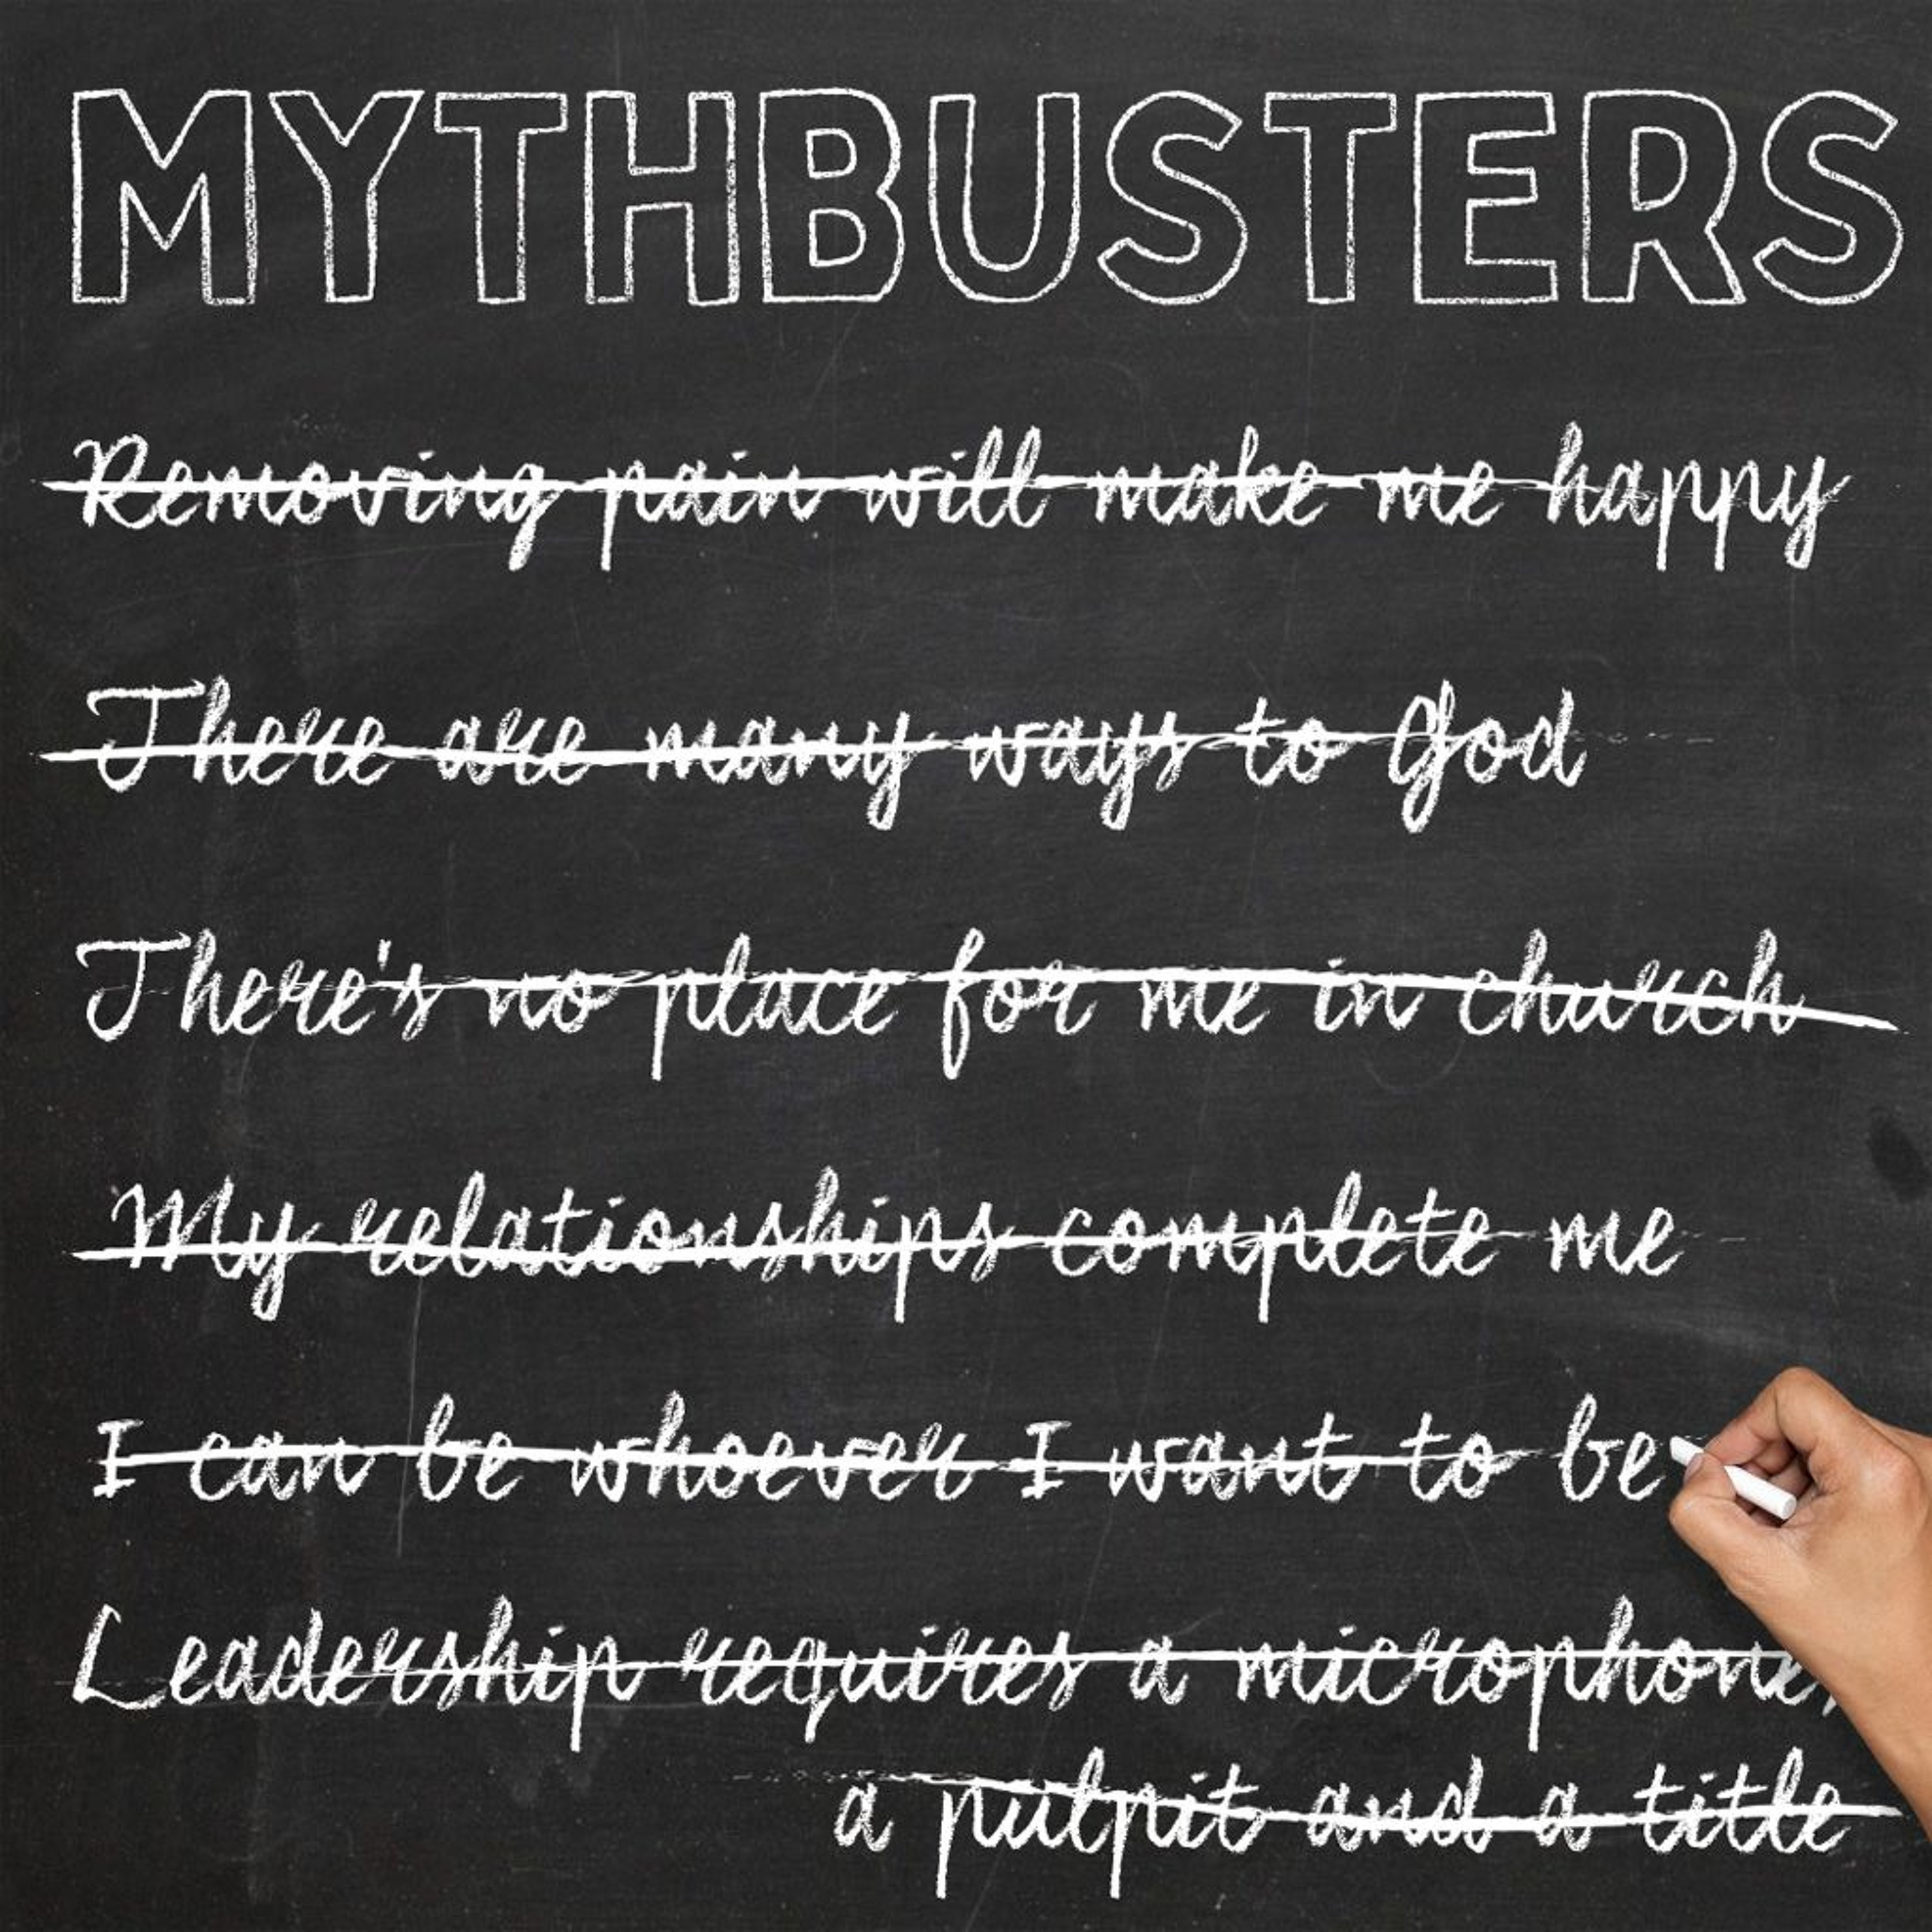 Mythbuster 1 - Myths about church - John Harding - 2020.01.05